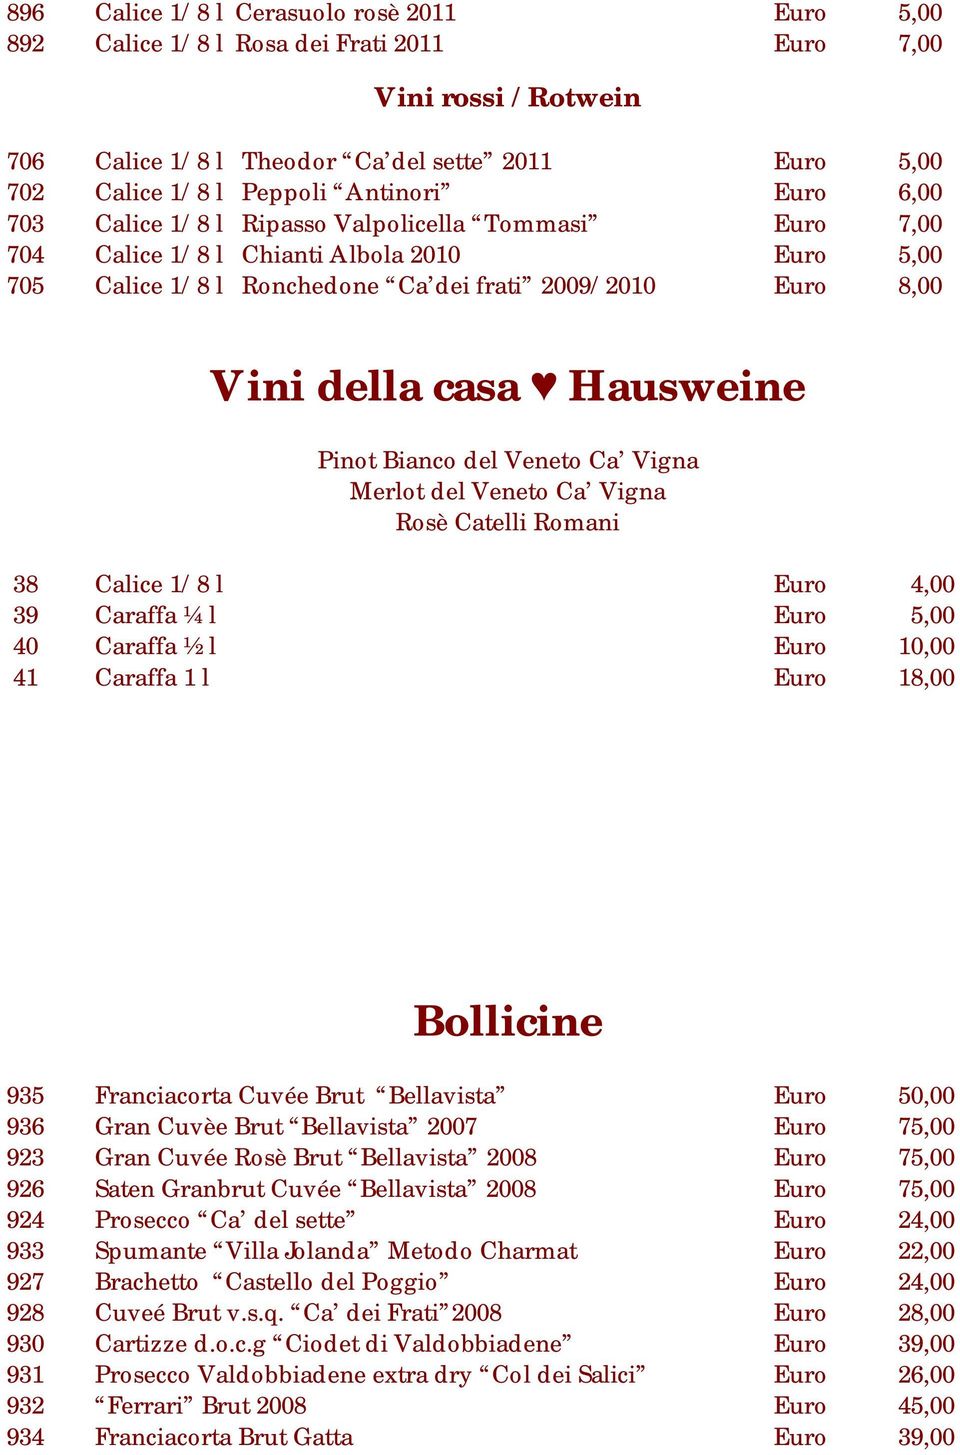 Hausweine Pinot Bianco del Veneto Ca Vigna Merlot del Veneto Ca Vigna Rosè Catelli Romani 38 Calice 1/8 l Euro 4,00 39 Caraffa ¼ l Euro 5,00 40 Caraffa ½ l Euro 10,00 41 Caraffa 1 l Euro 18,00